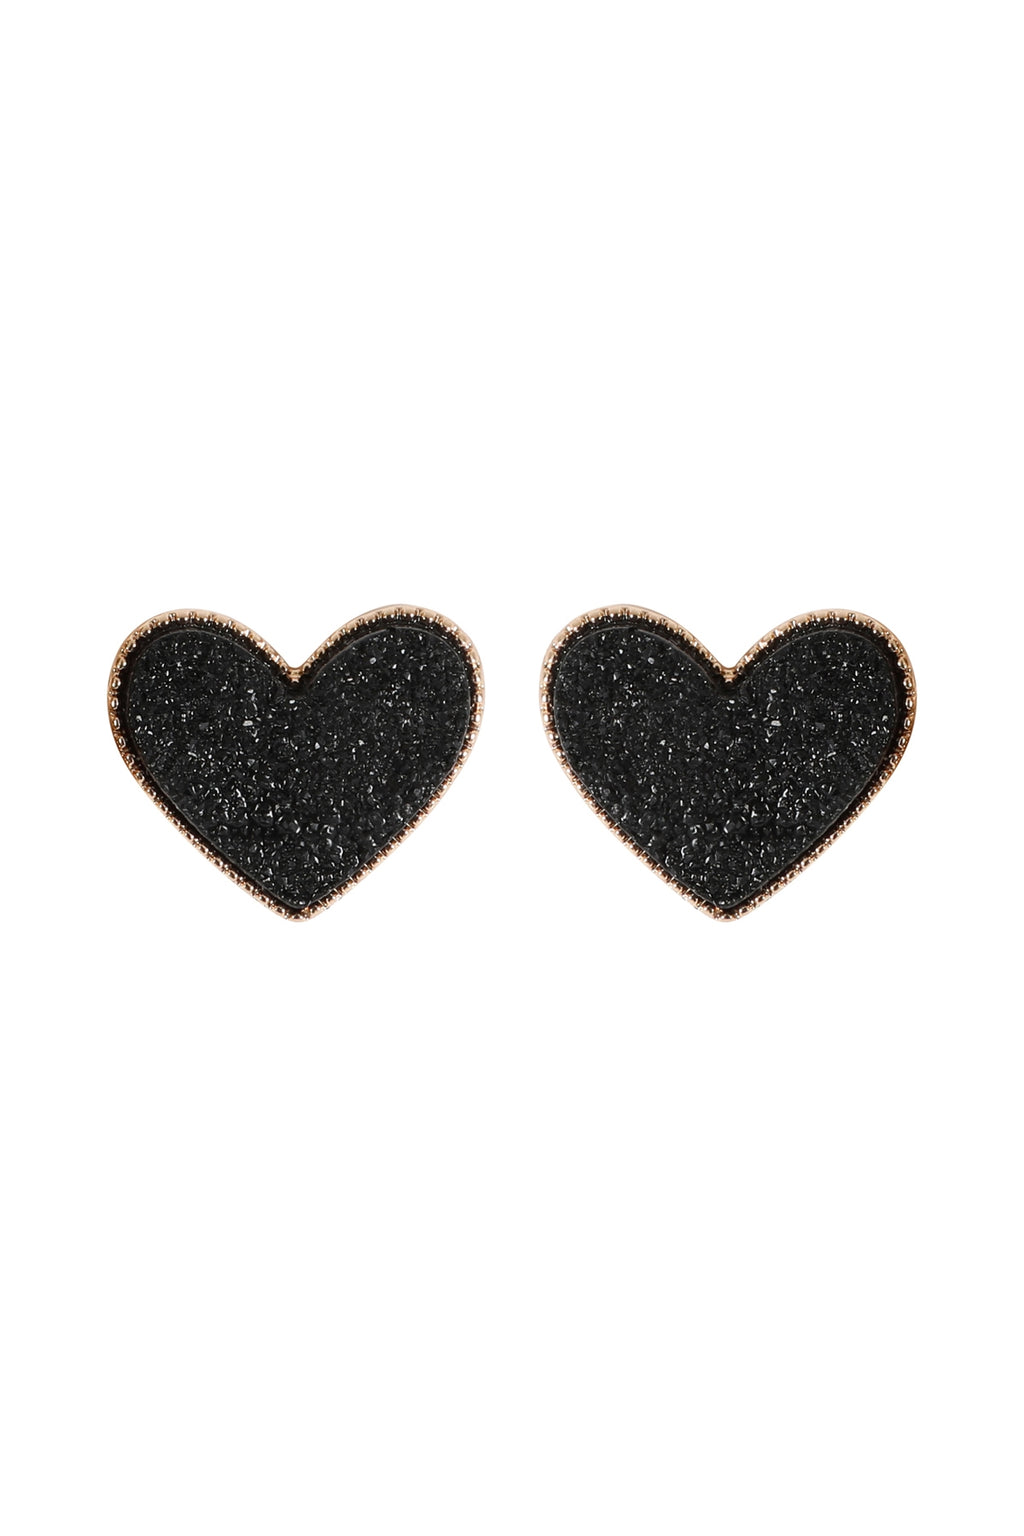 Heart Druzy Post Earrings Black - Pack of 6